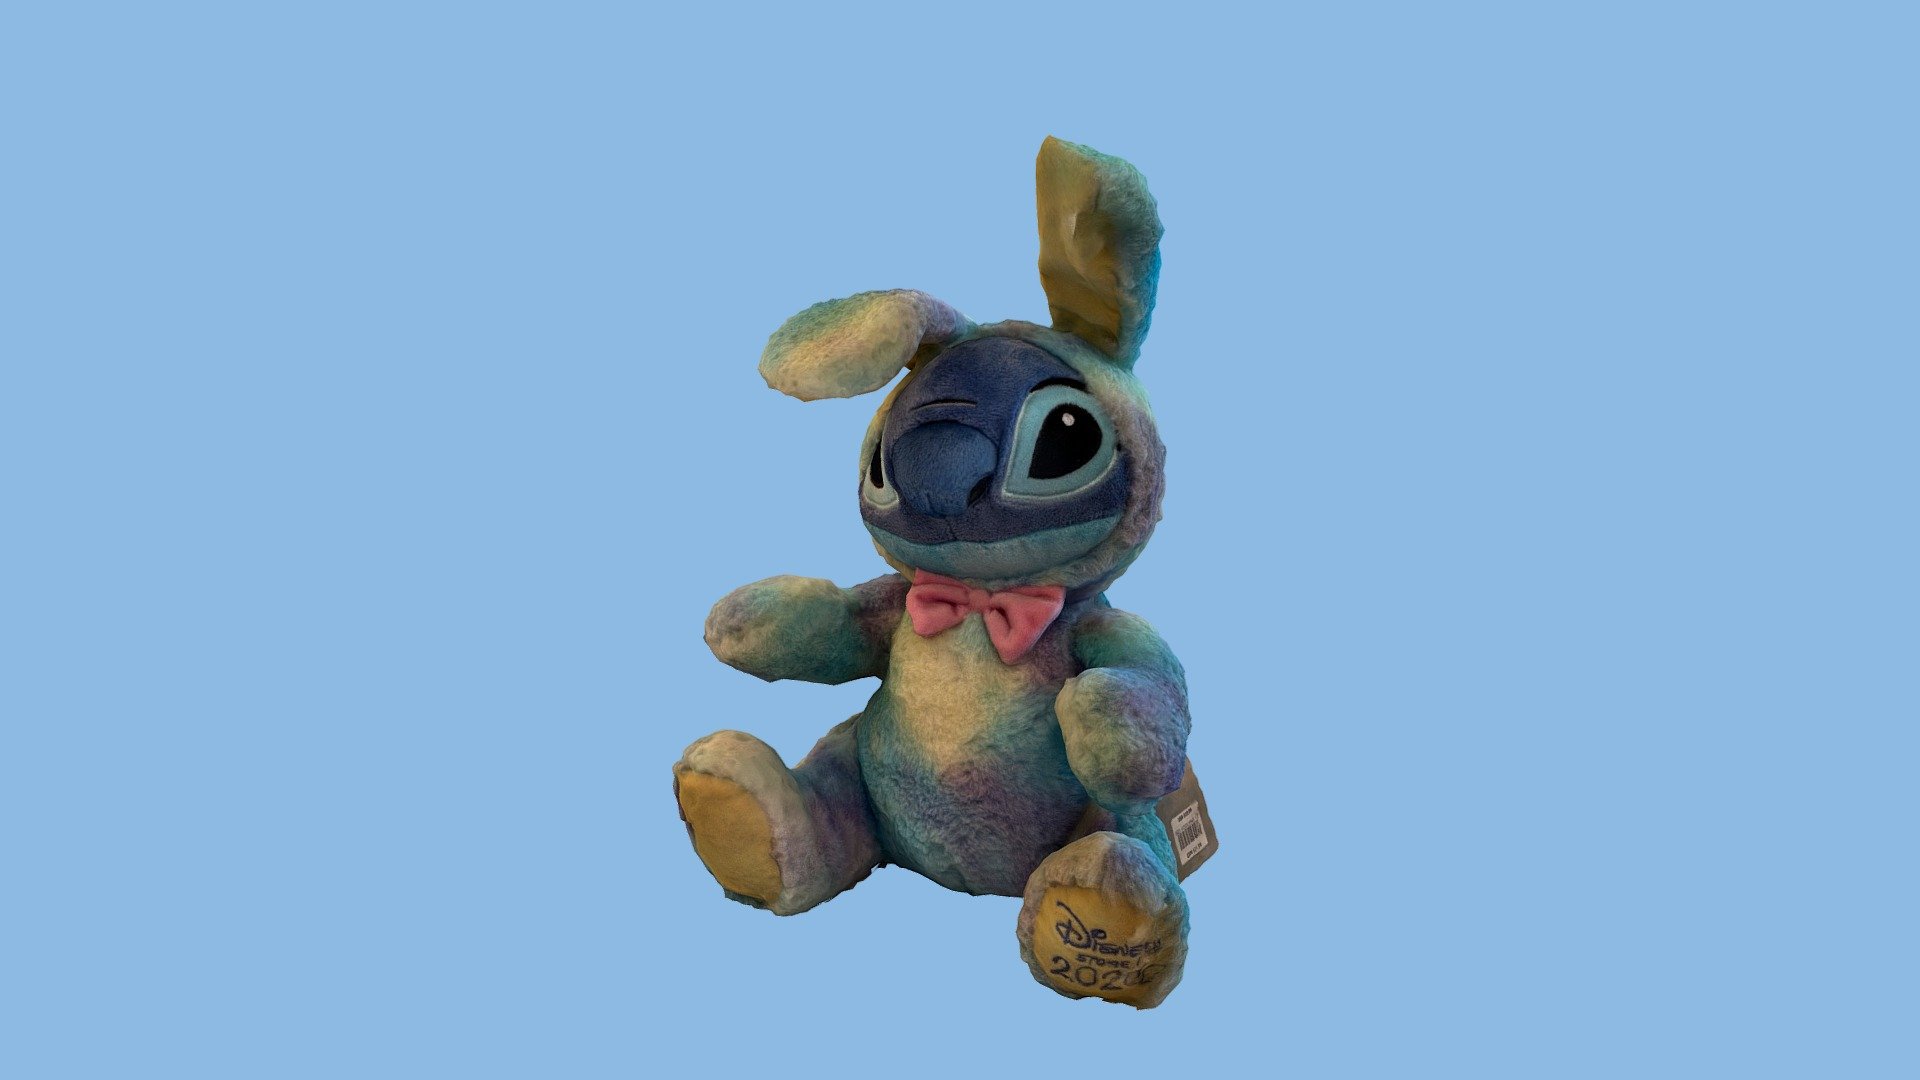 A cute little stitch teddy bear in a Tie dye suit 

Created with Polycam - Tie Dye Teddy Bear - Buy Royalty Free 3D model by Studious Studios (@Studious) 3d model